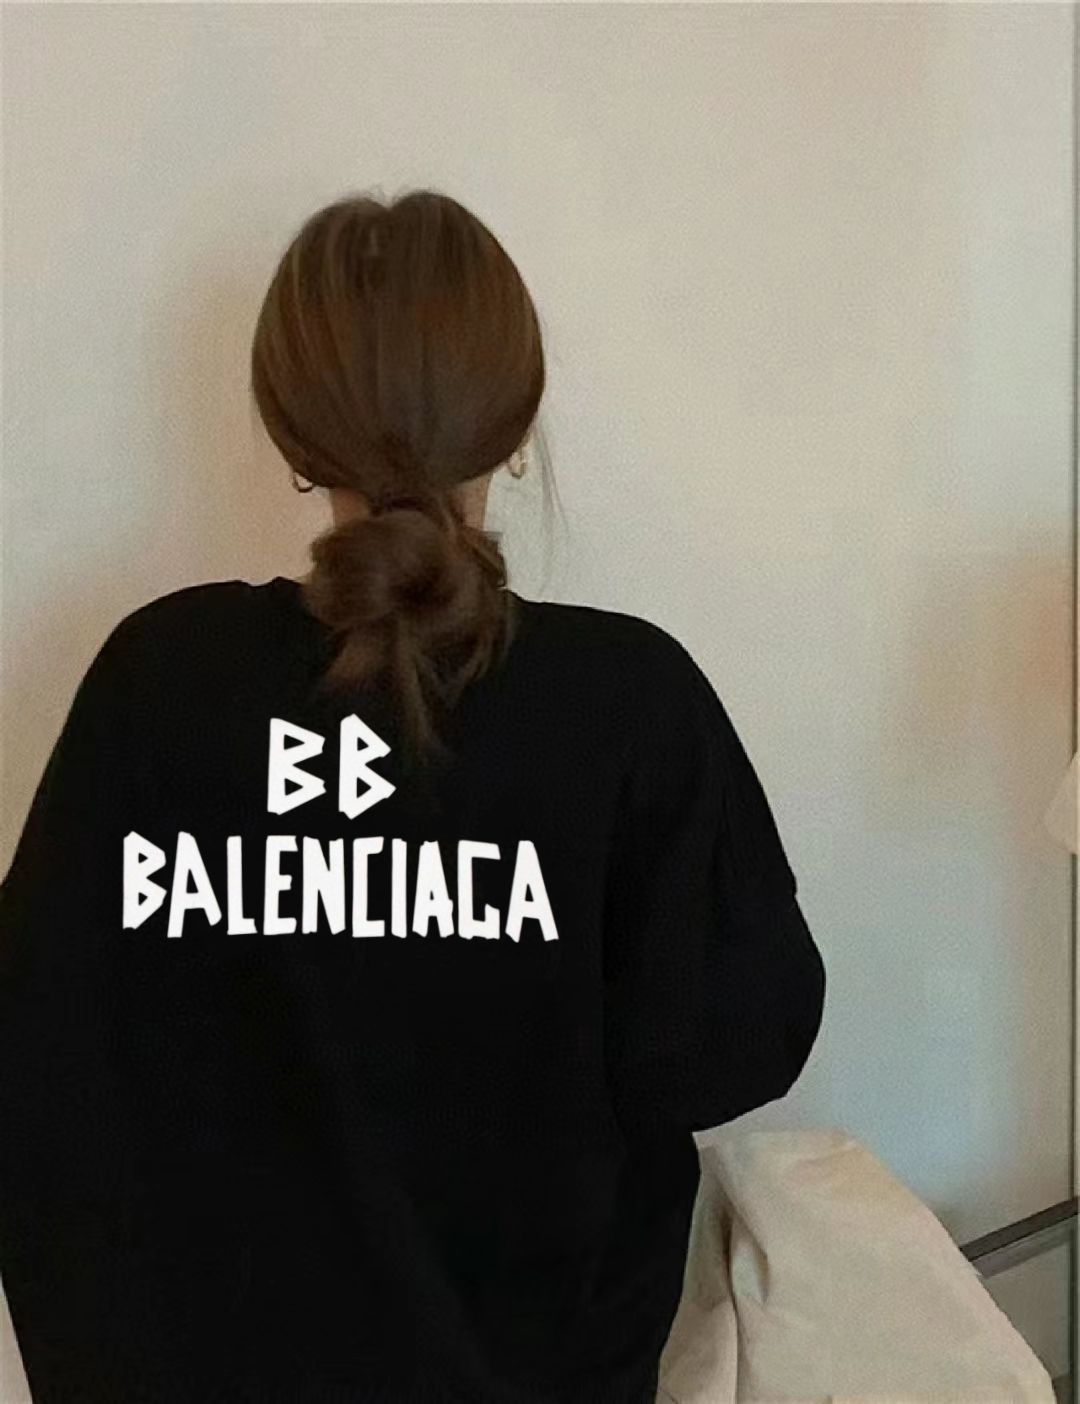 High Quality Happy Copy
 Balenciaga Clothing Sweatshirts Best Capucines Replica
 Black White Printing Unisex Cotton